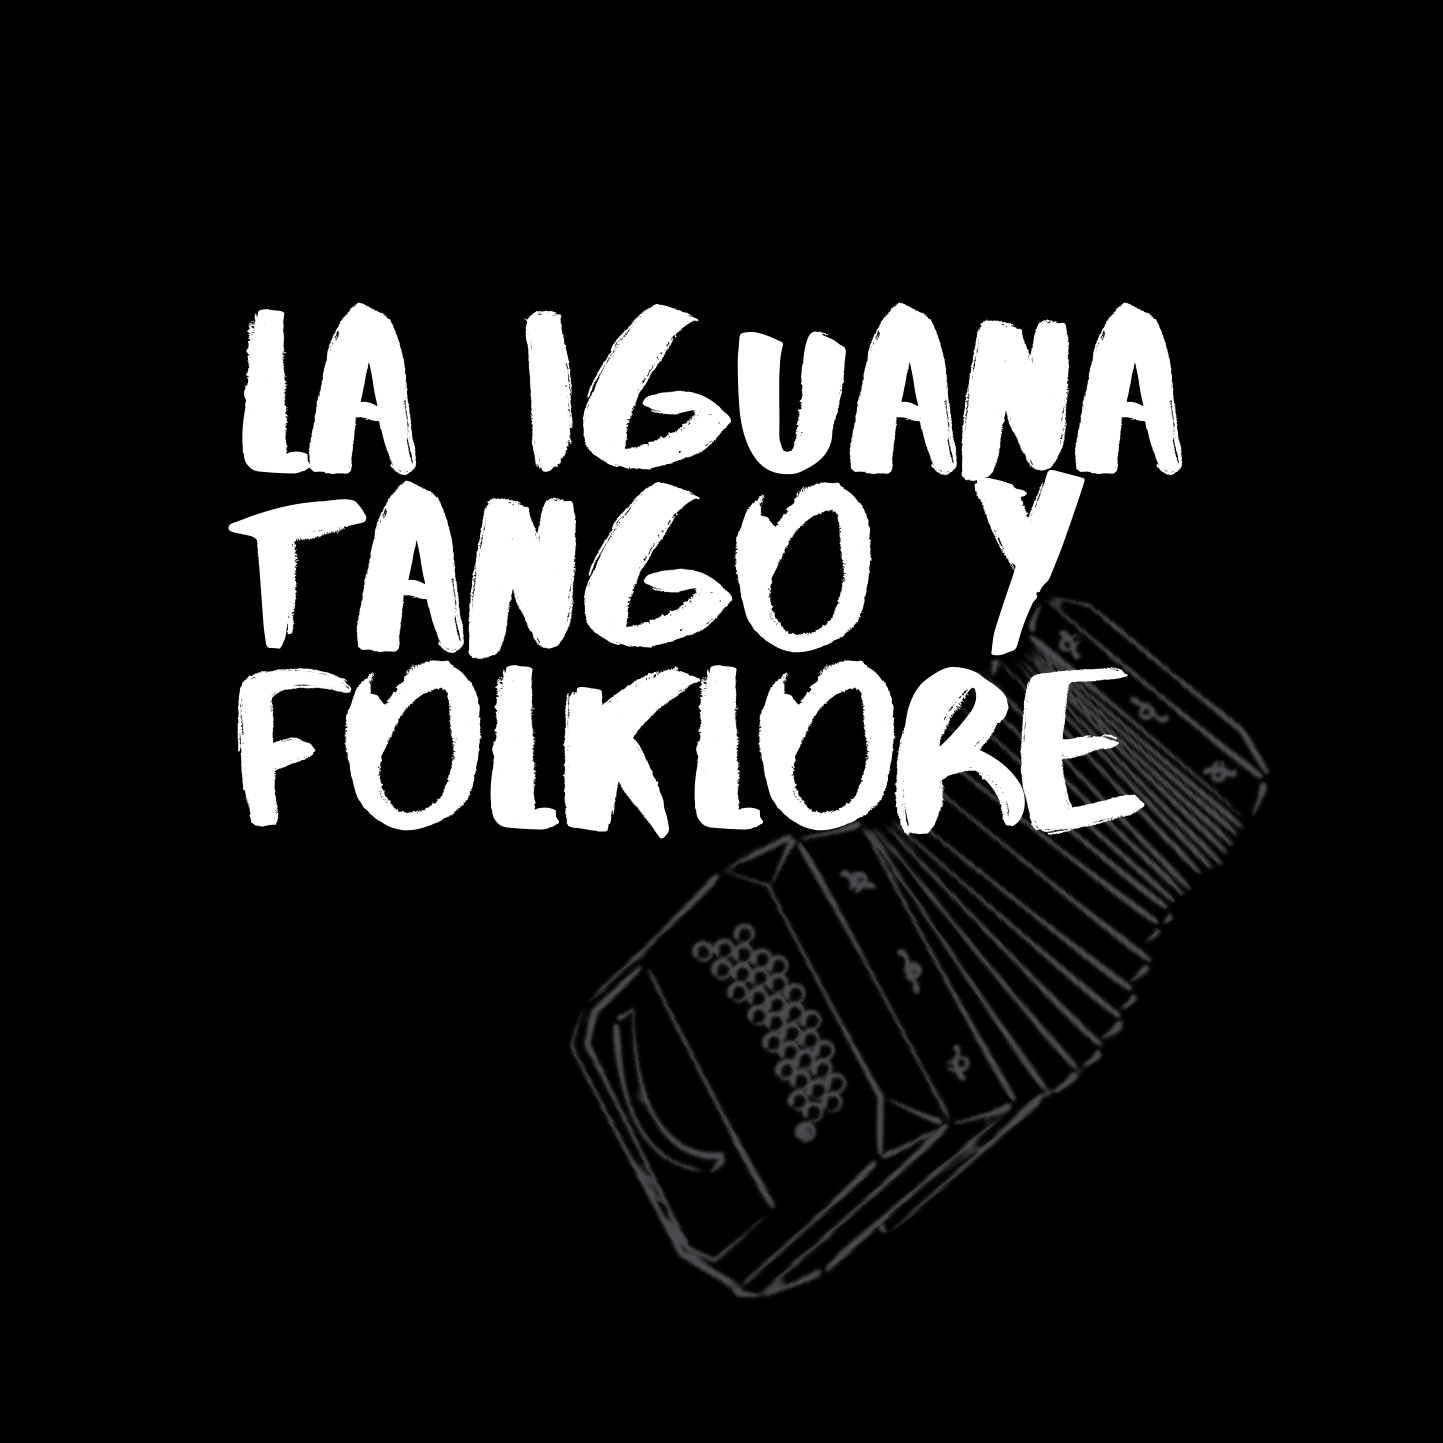 La Iguana Tango